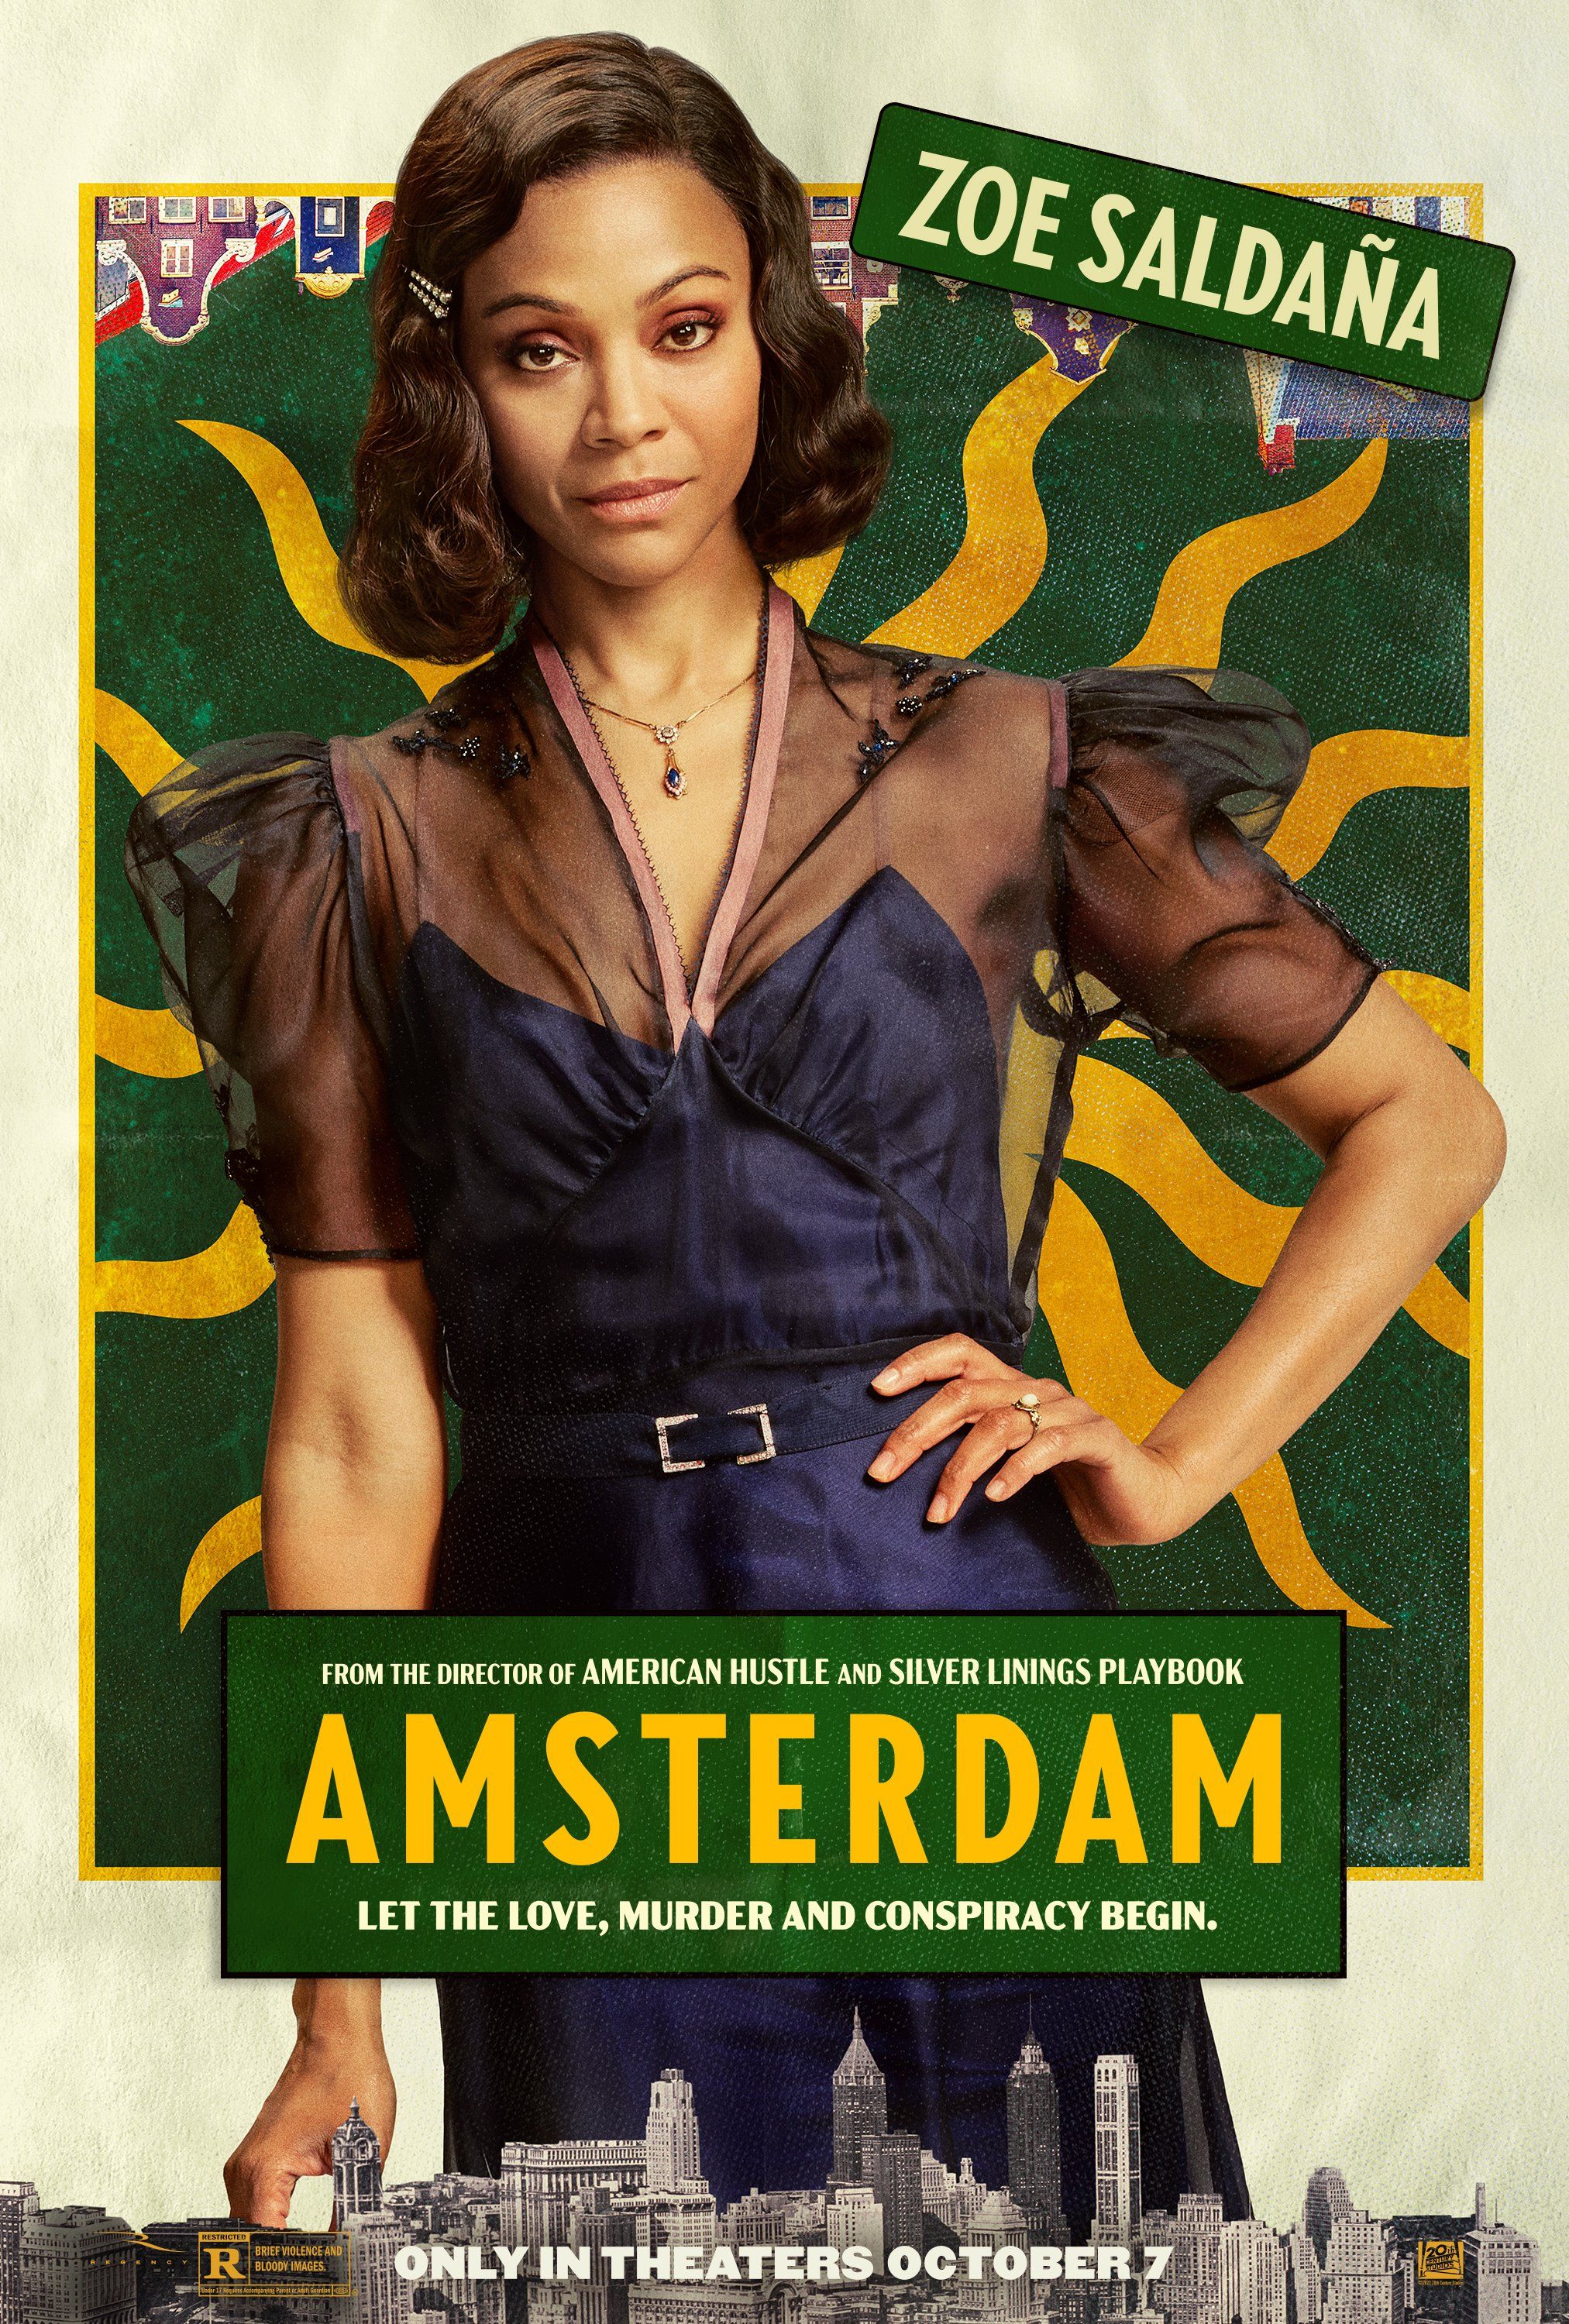 Zoe Saldana in Amsterdam poster